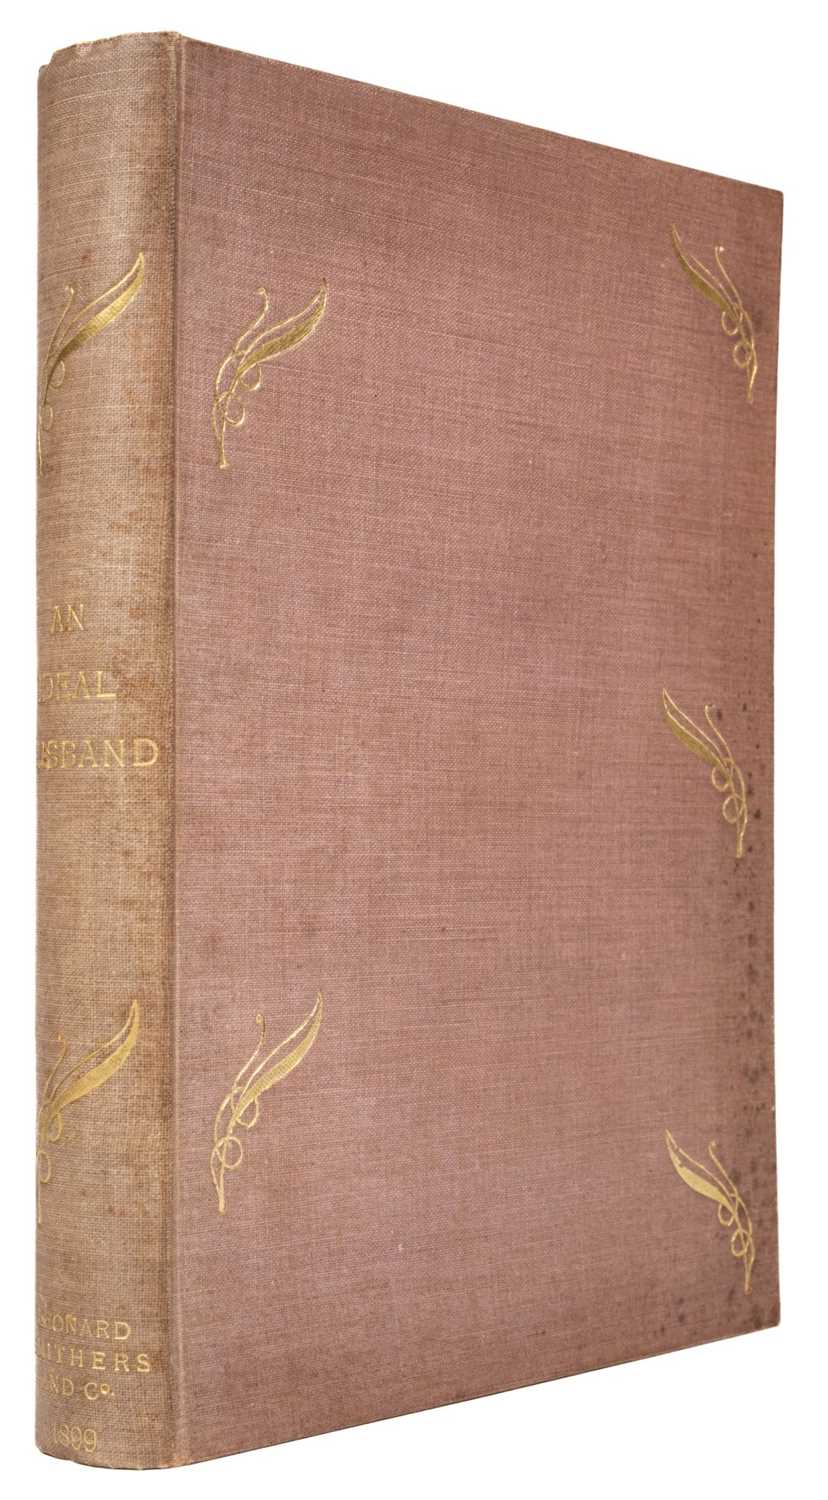 Lot 696 - Wilde (Oscar). An Ideal Husband, 1st edition, 1899